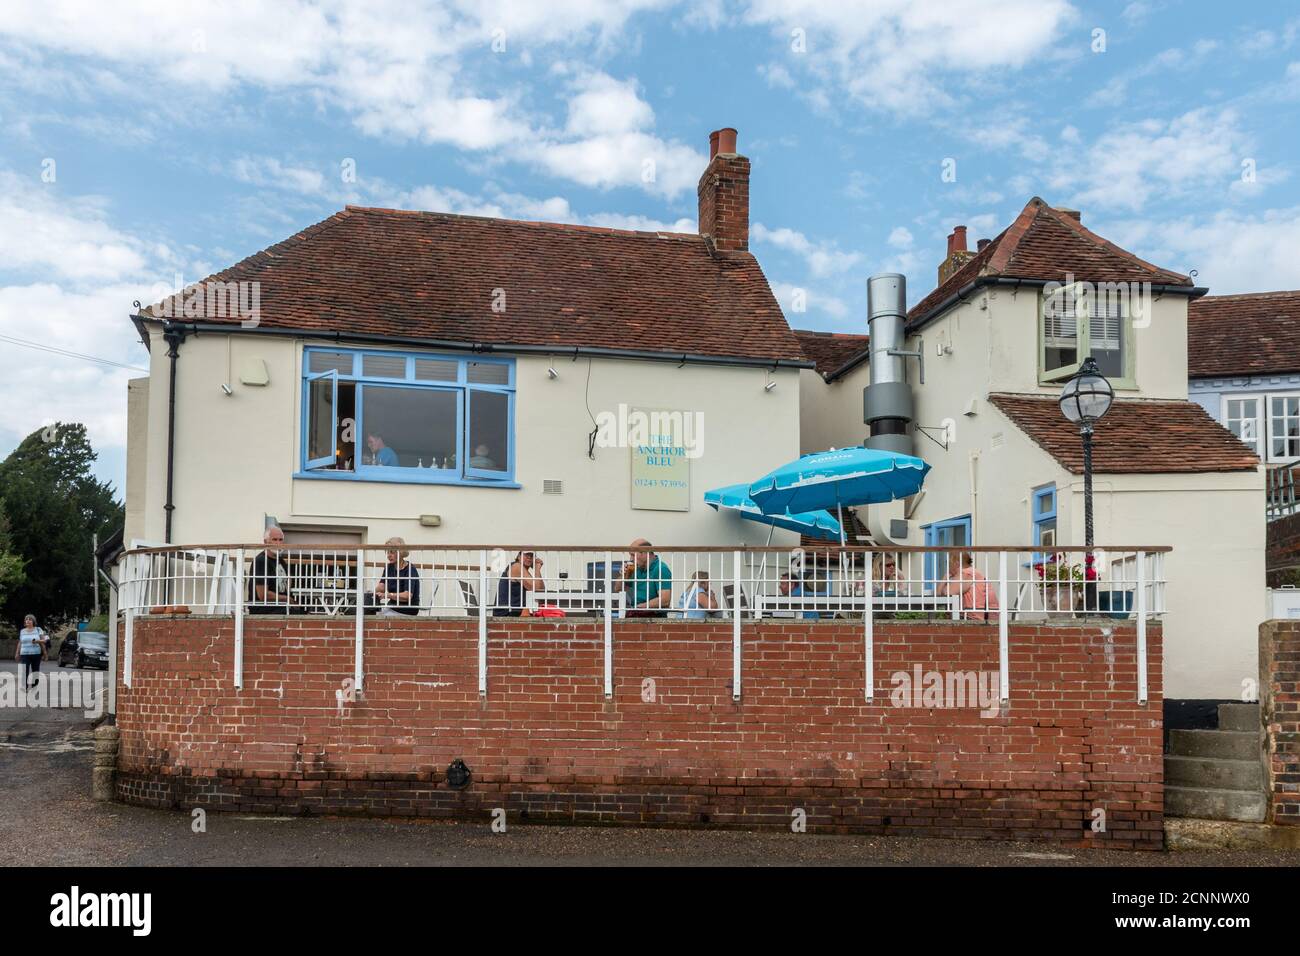 The Anchor Bleu harbourside pub or public house in Bosham village, West Sussex, UK Stock Photo